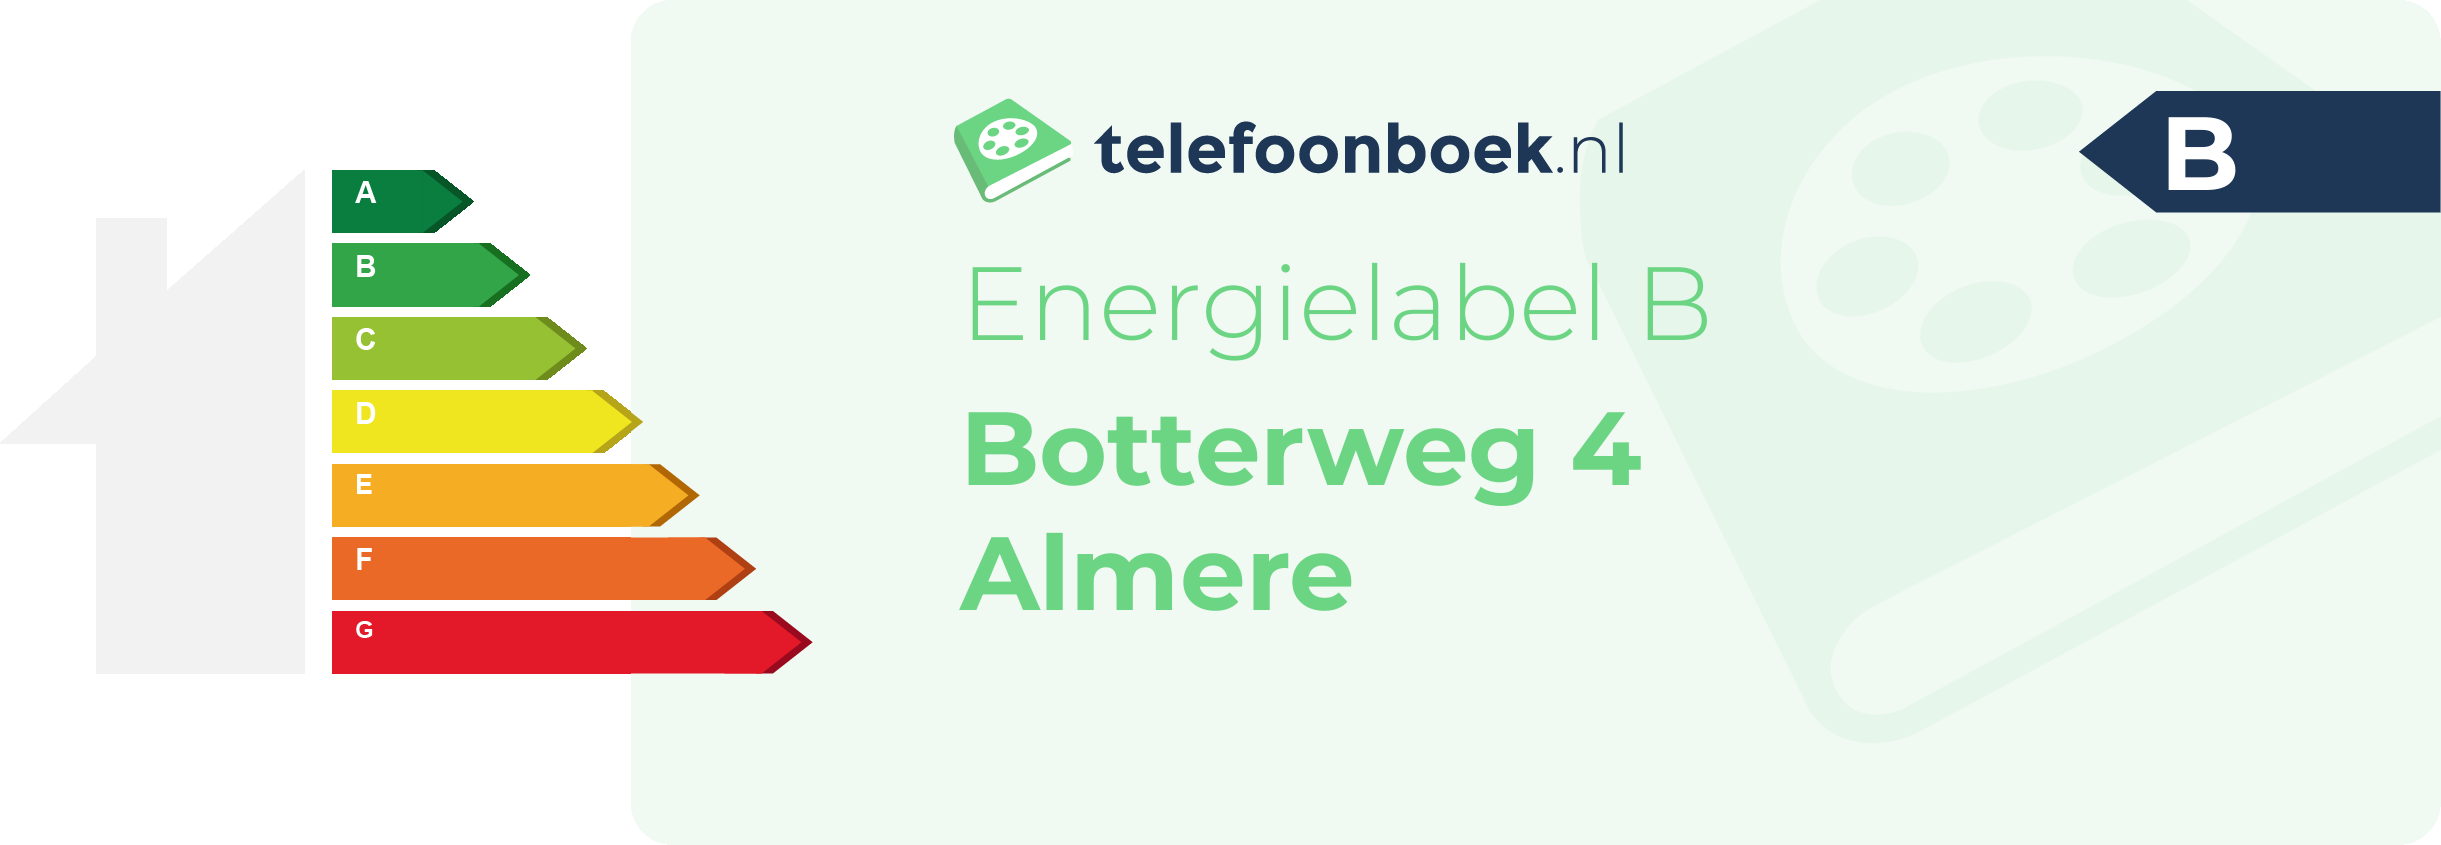 Energielabel Botterweg 4 Almere